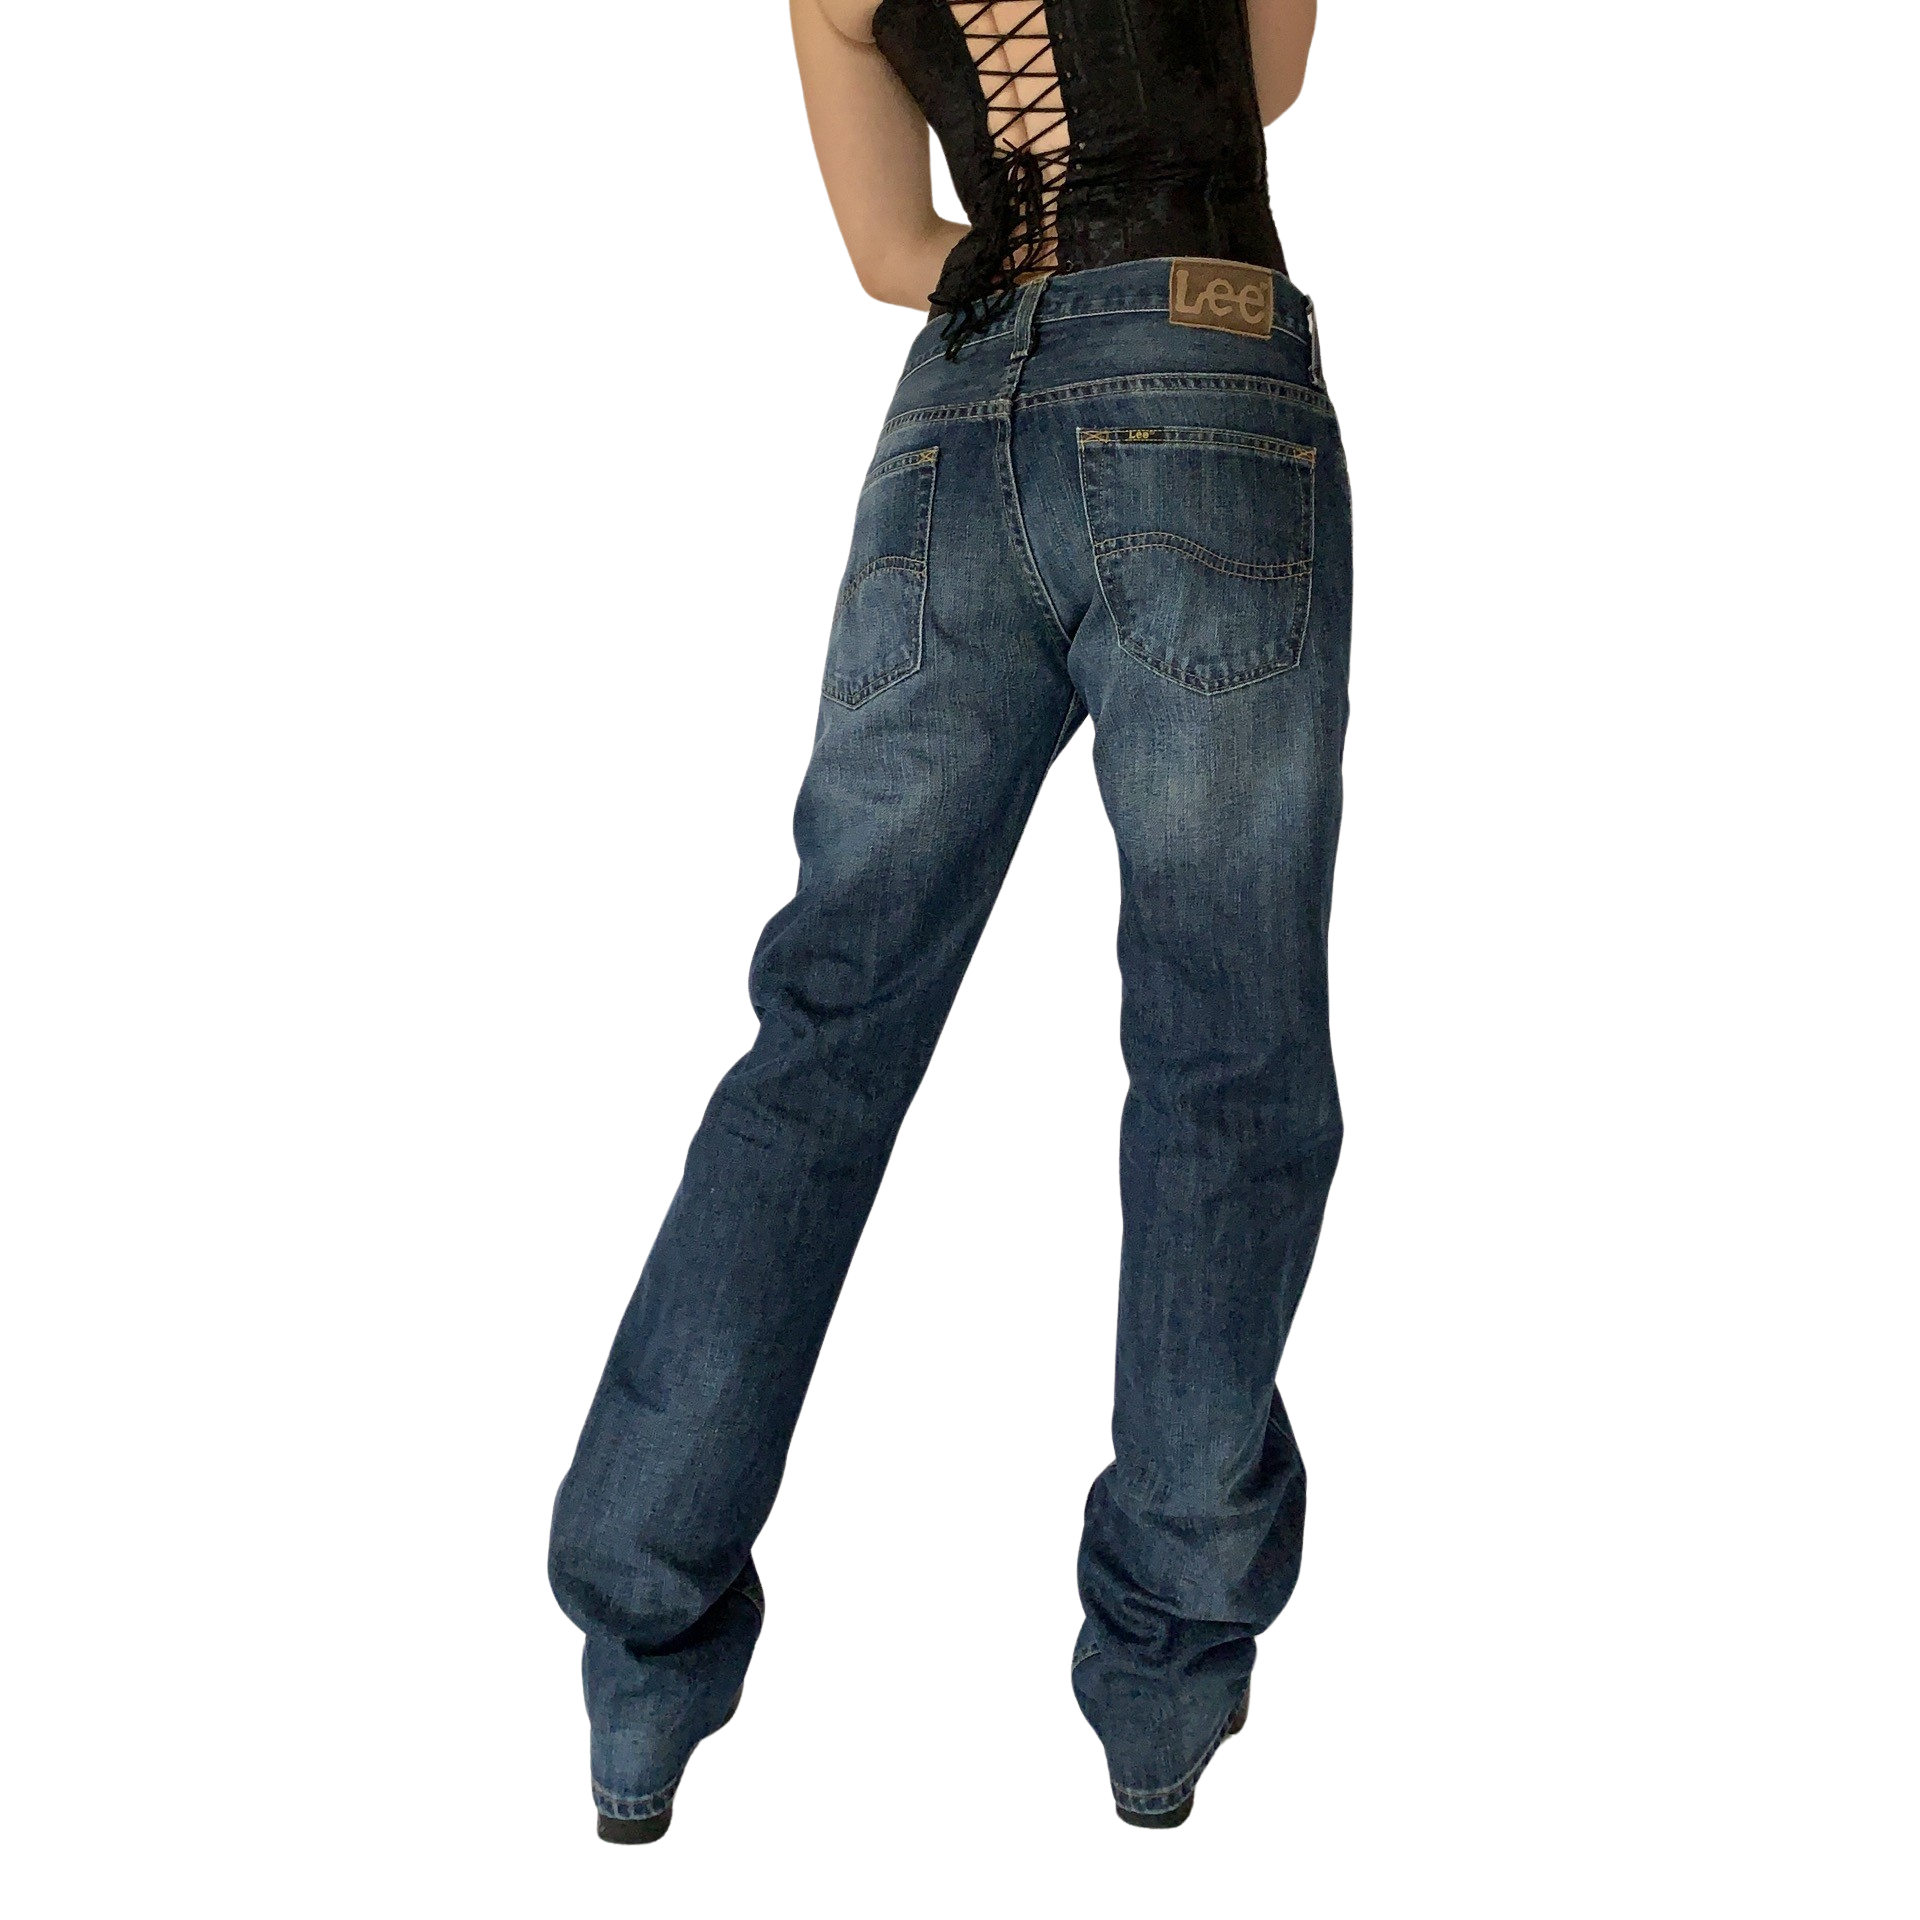 2000s Boyfriend Jeans (M)